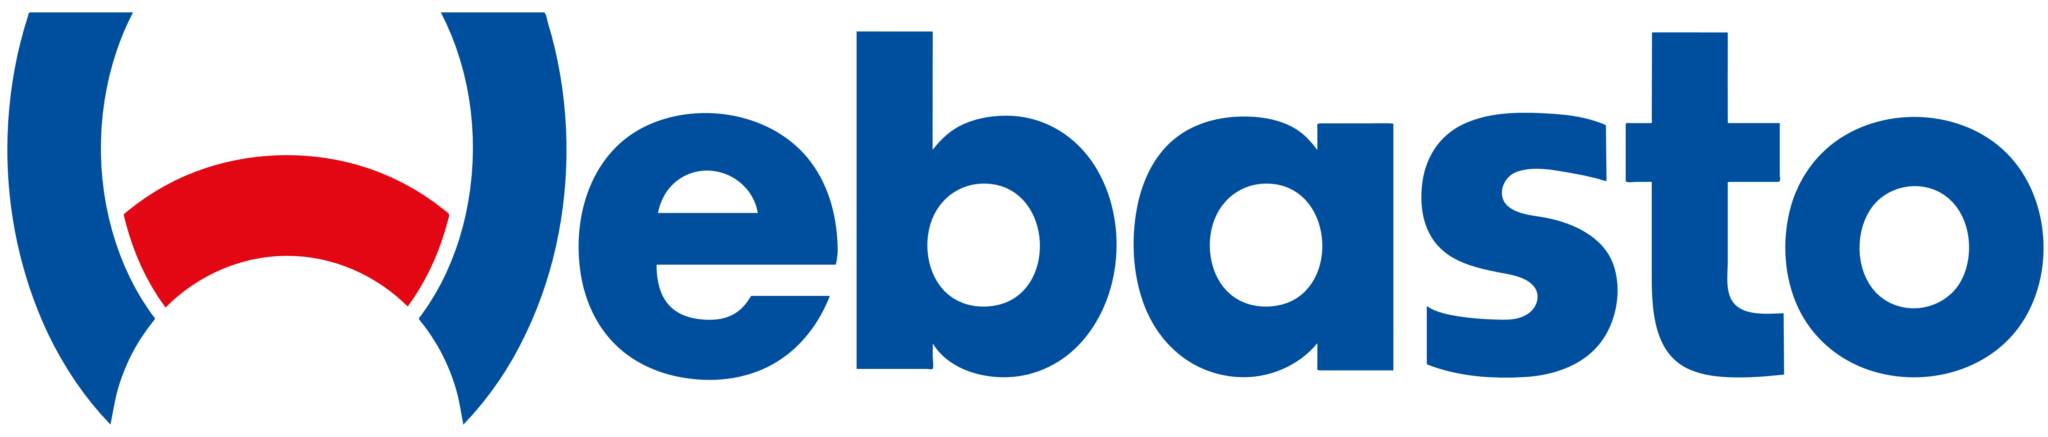 Webasto_logo_logotype